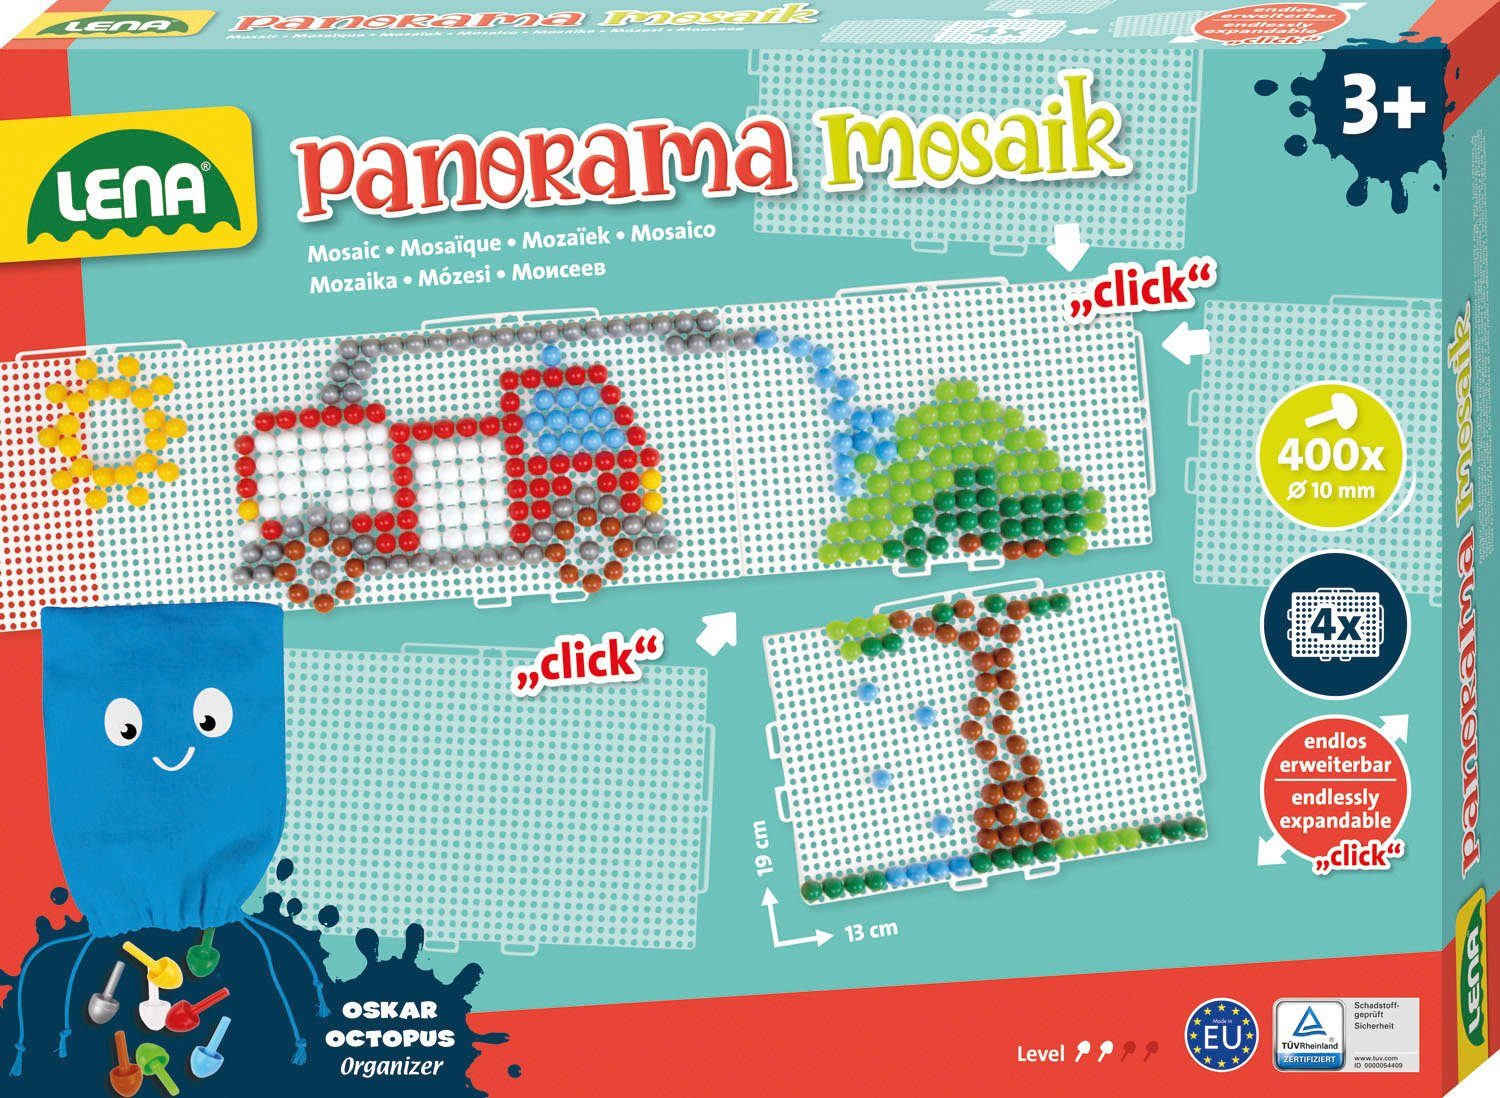 Lena® Kreativset Europe XL in Panorama Mosaik Set color, Made